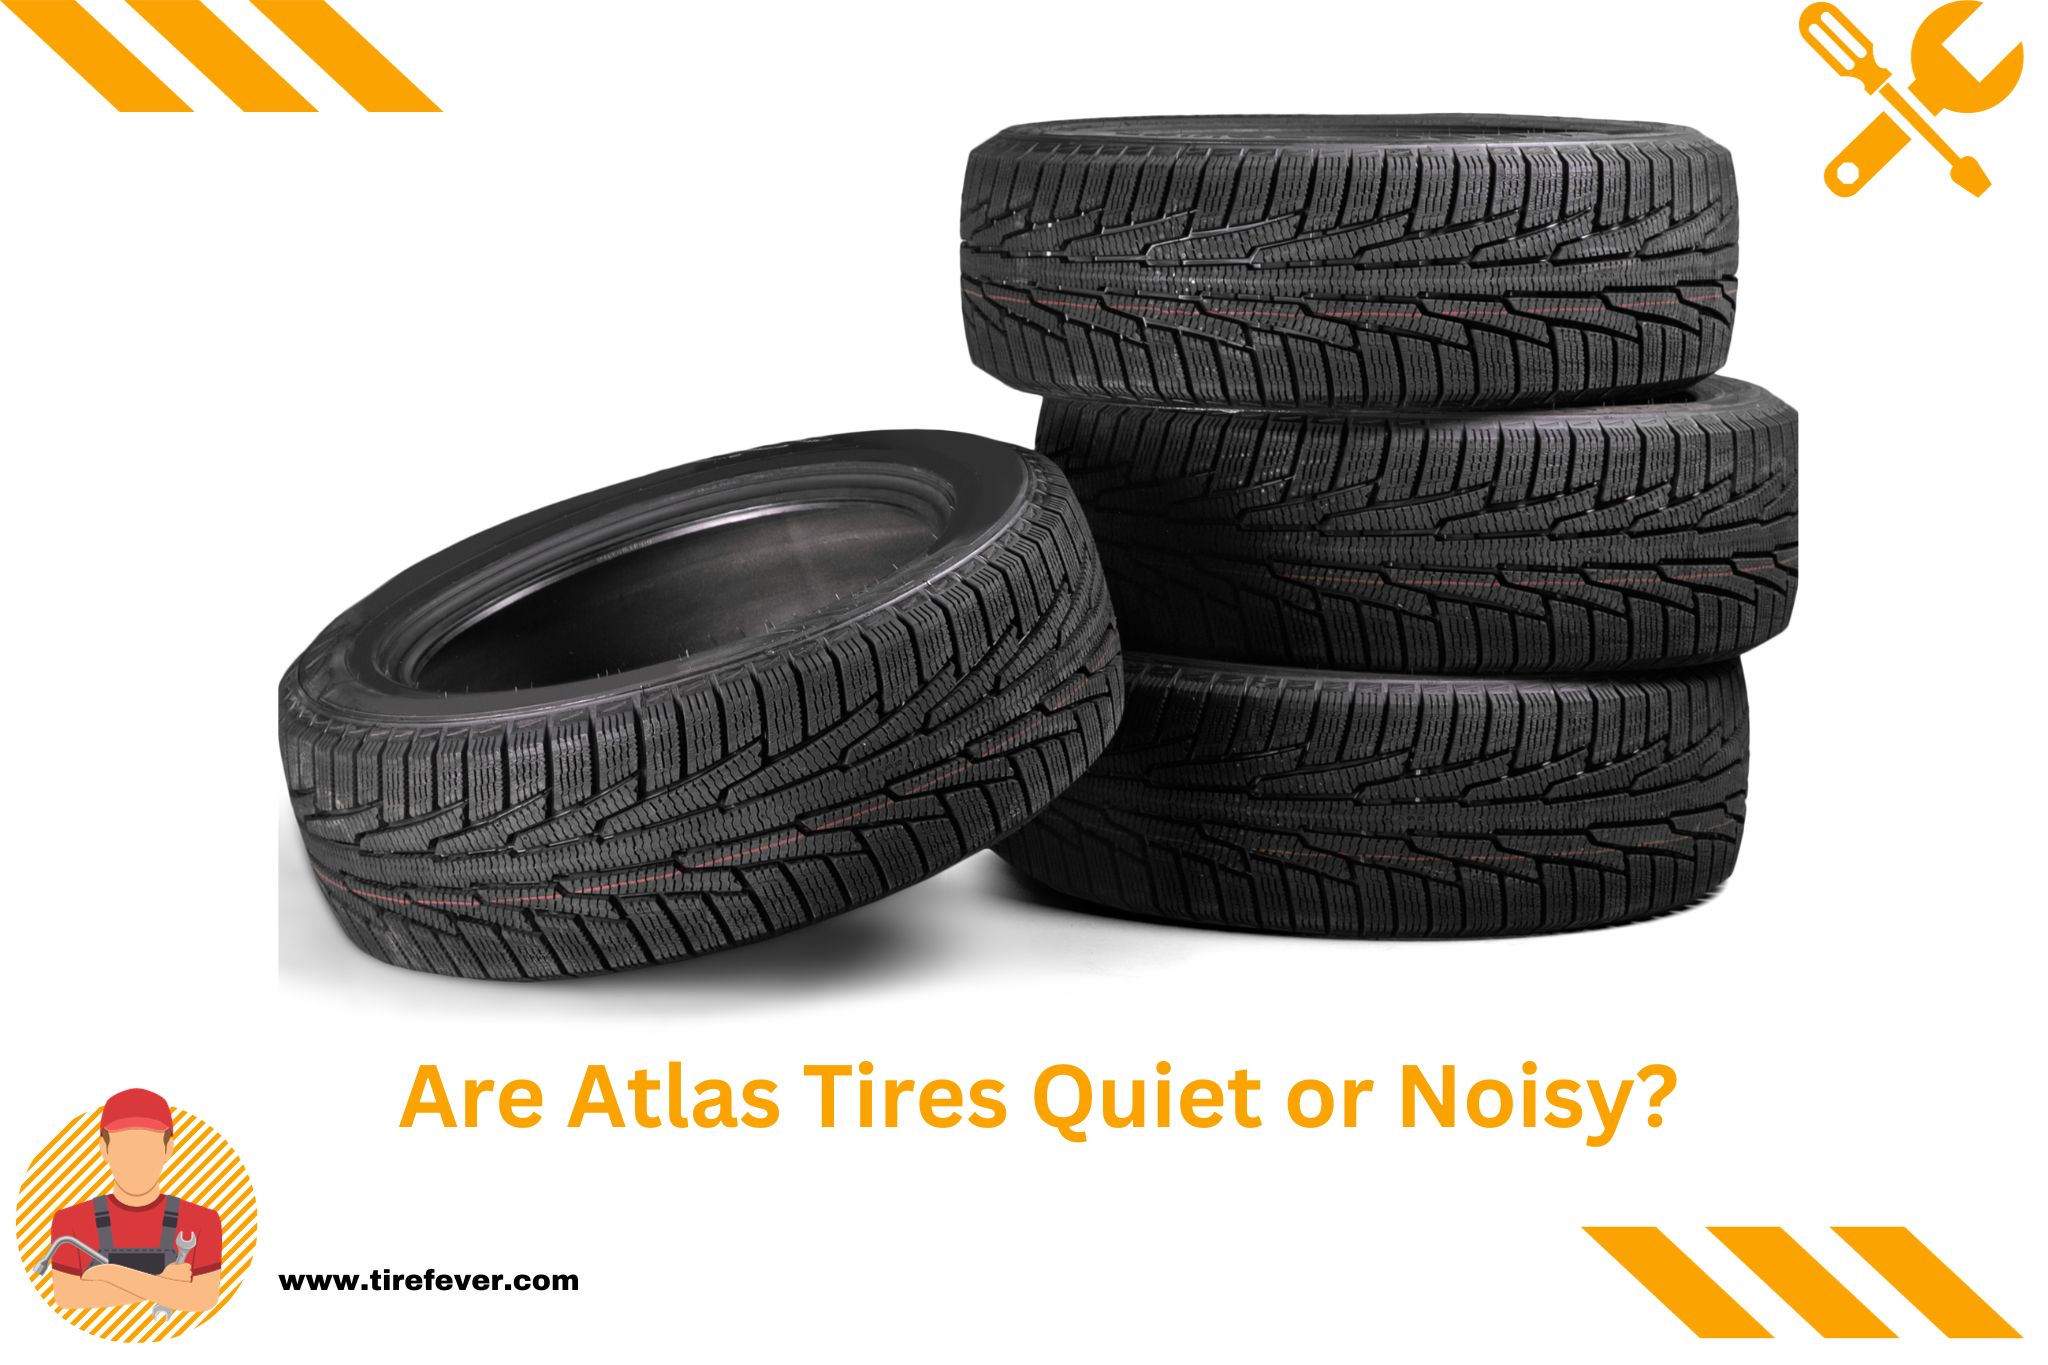 Are Atlas Tires Quiet or Noisy?